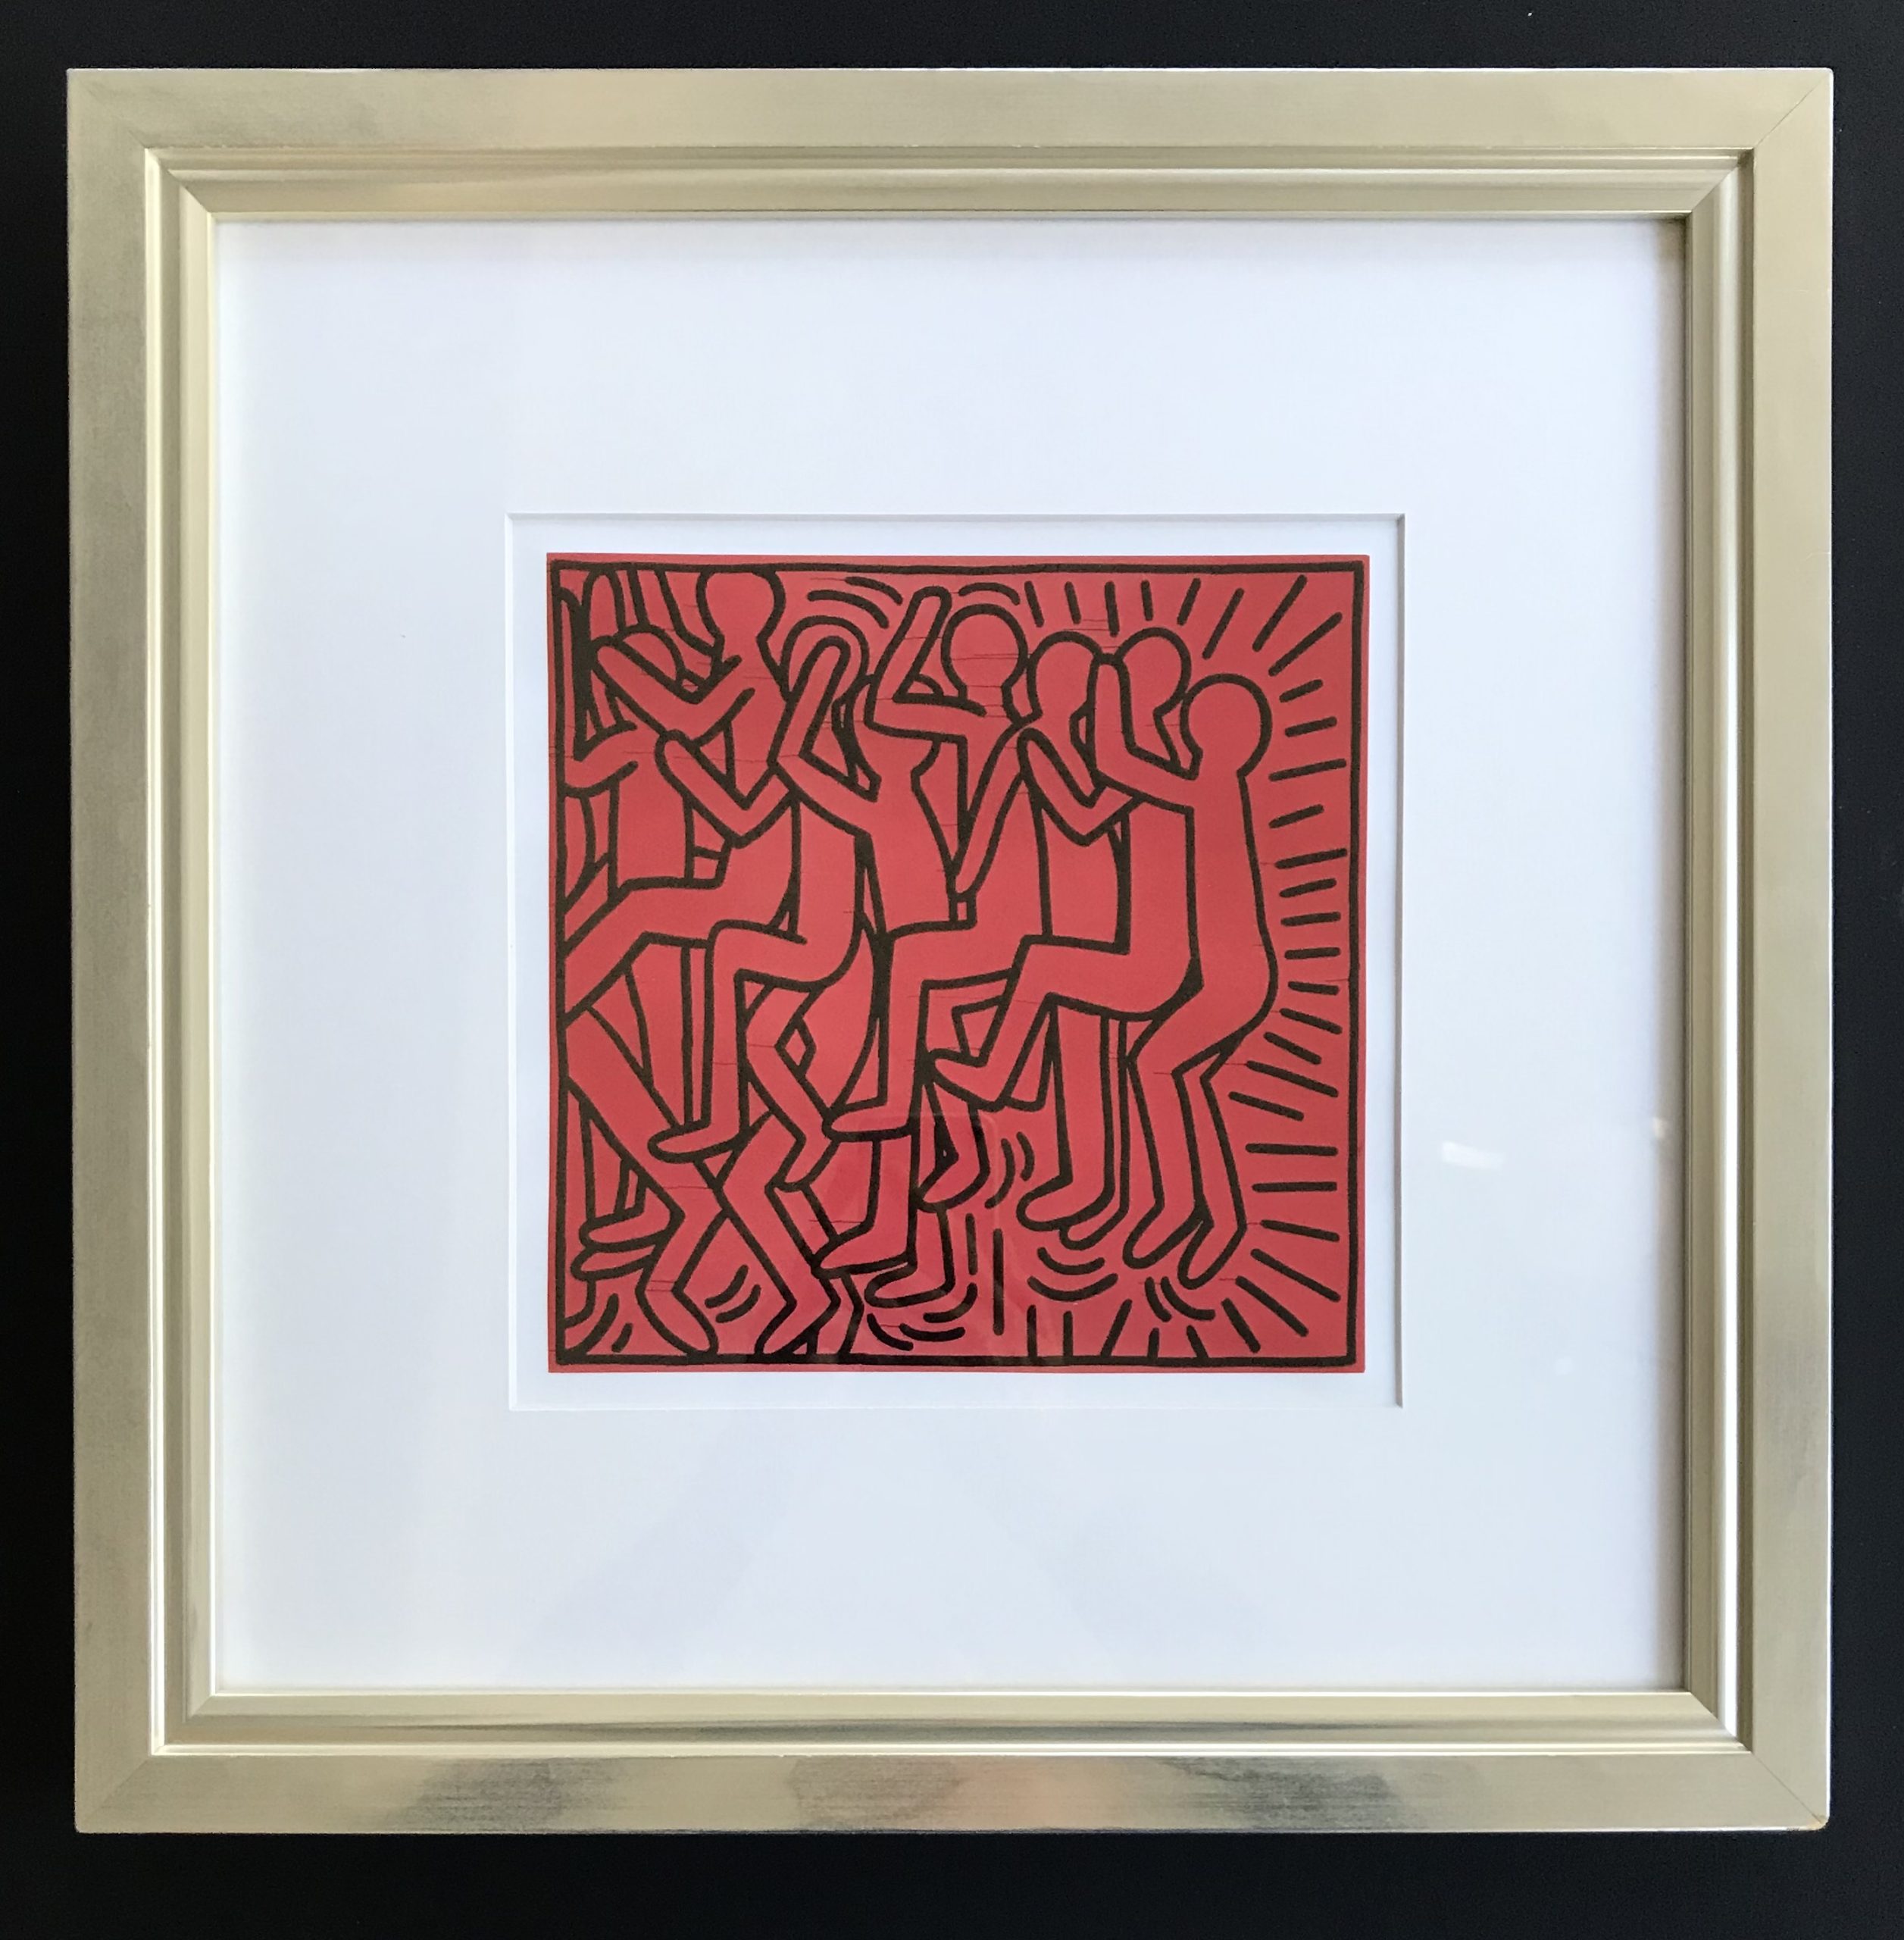 Framed Keith Haring print 1-1 2008